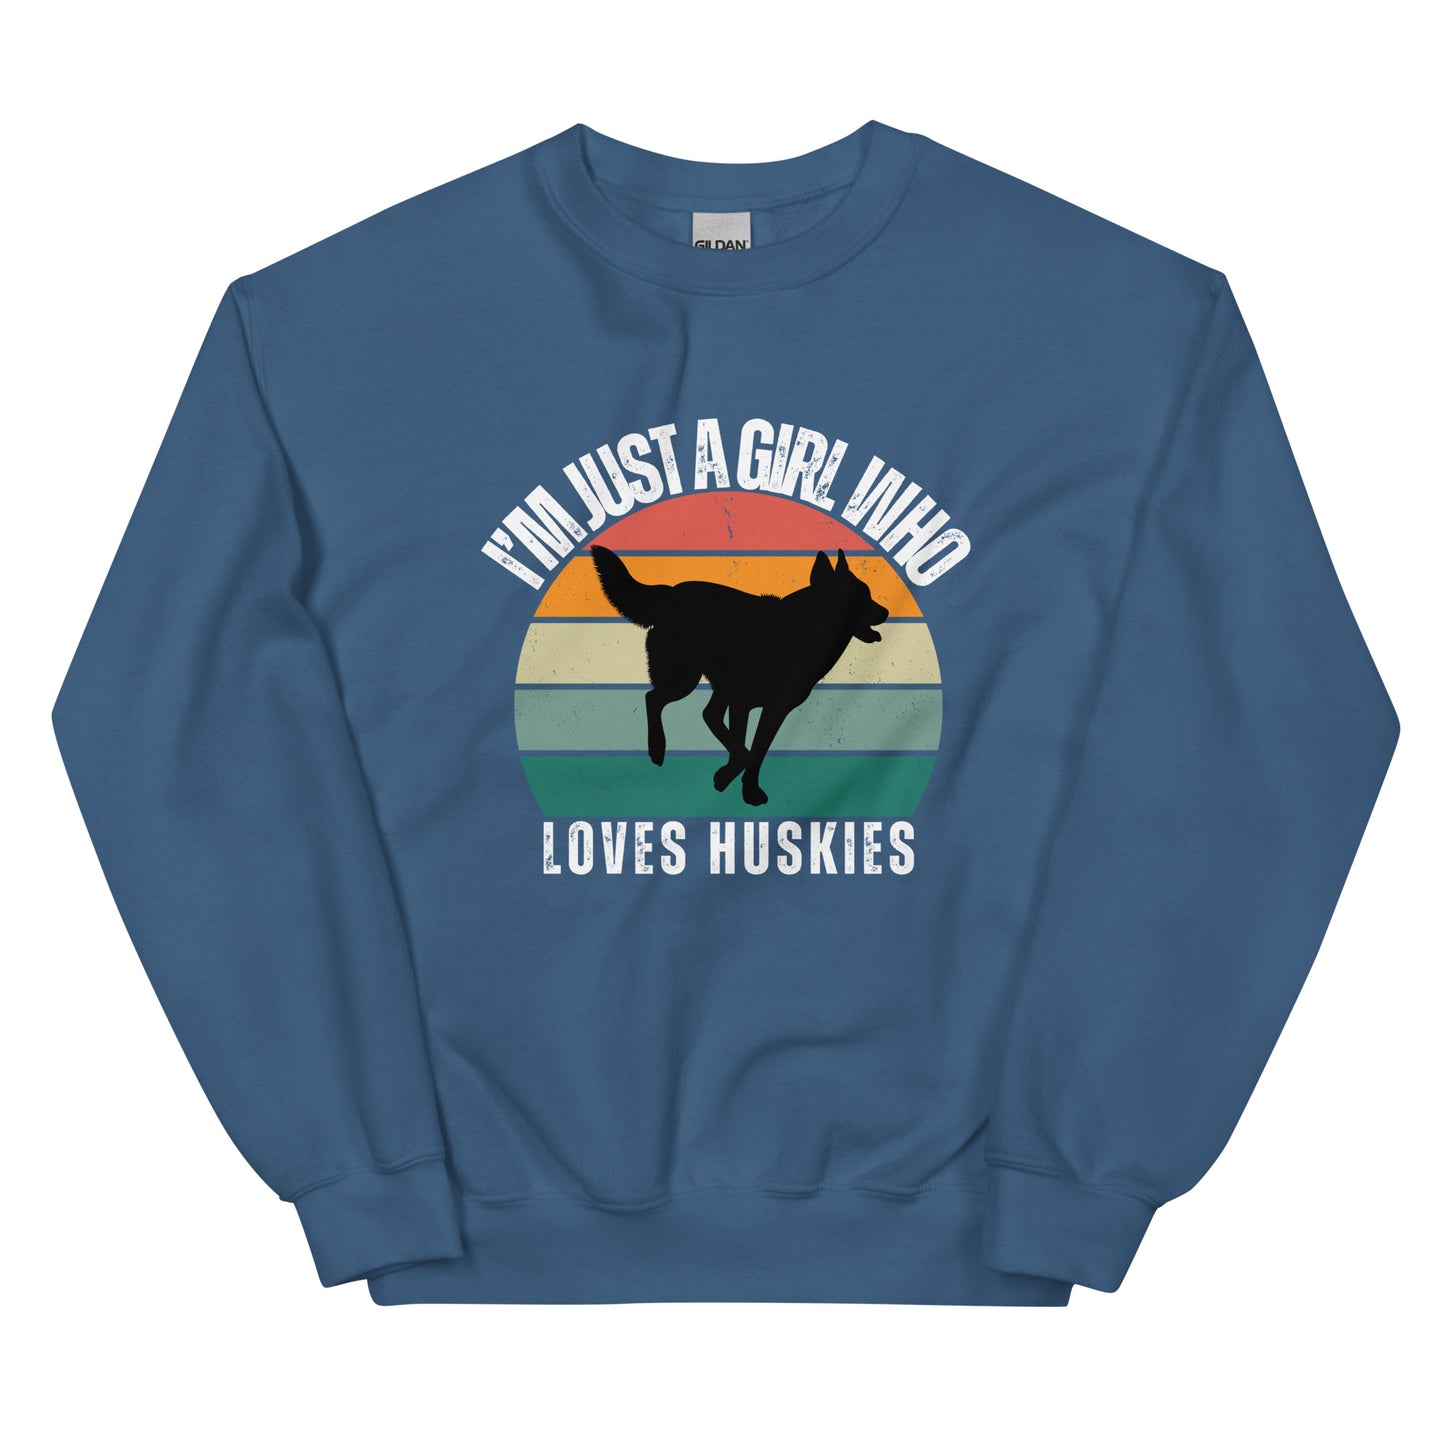 I'M JUST A GIRL WHO LOVES HUSKIES - Unisex Sweatshirt